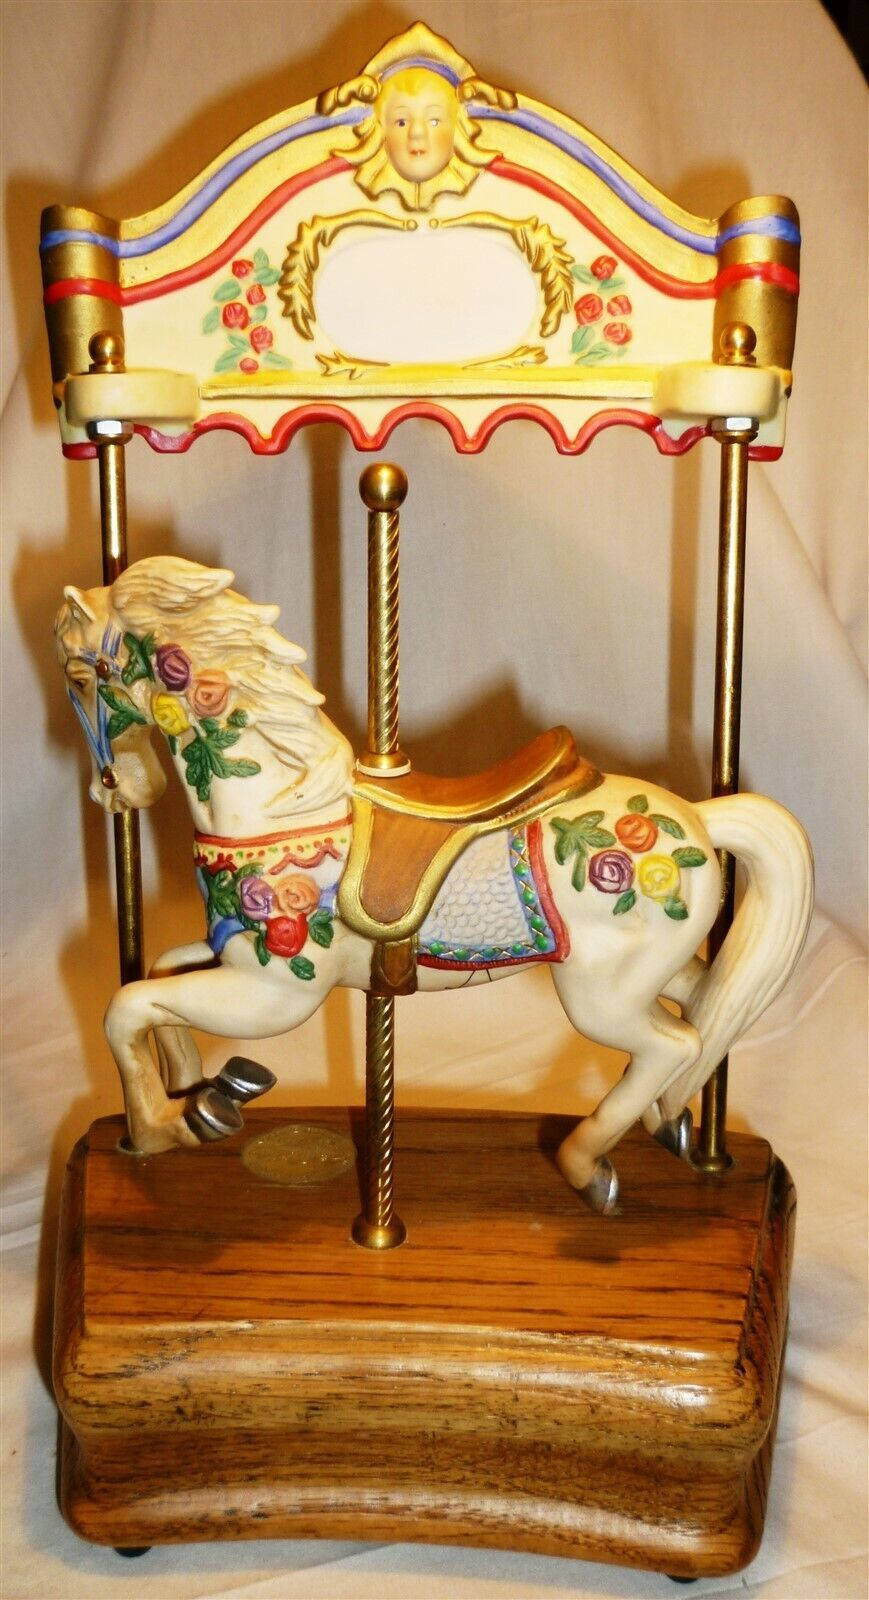 Primary image for WILLITTS TOBIN FRALEY PORCELAIN CAROUSEL HORSE FIGURINE MUSIC BOX CAROUSEL WALTZ